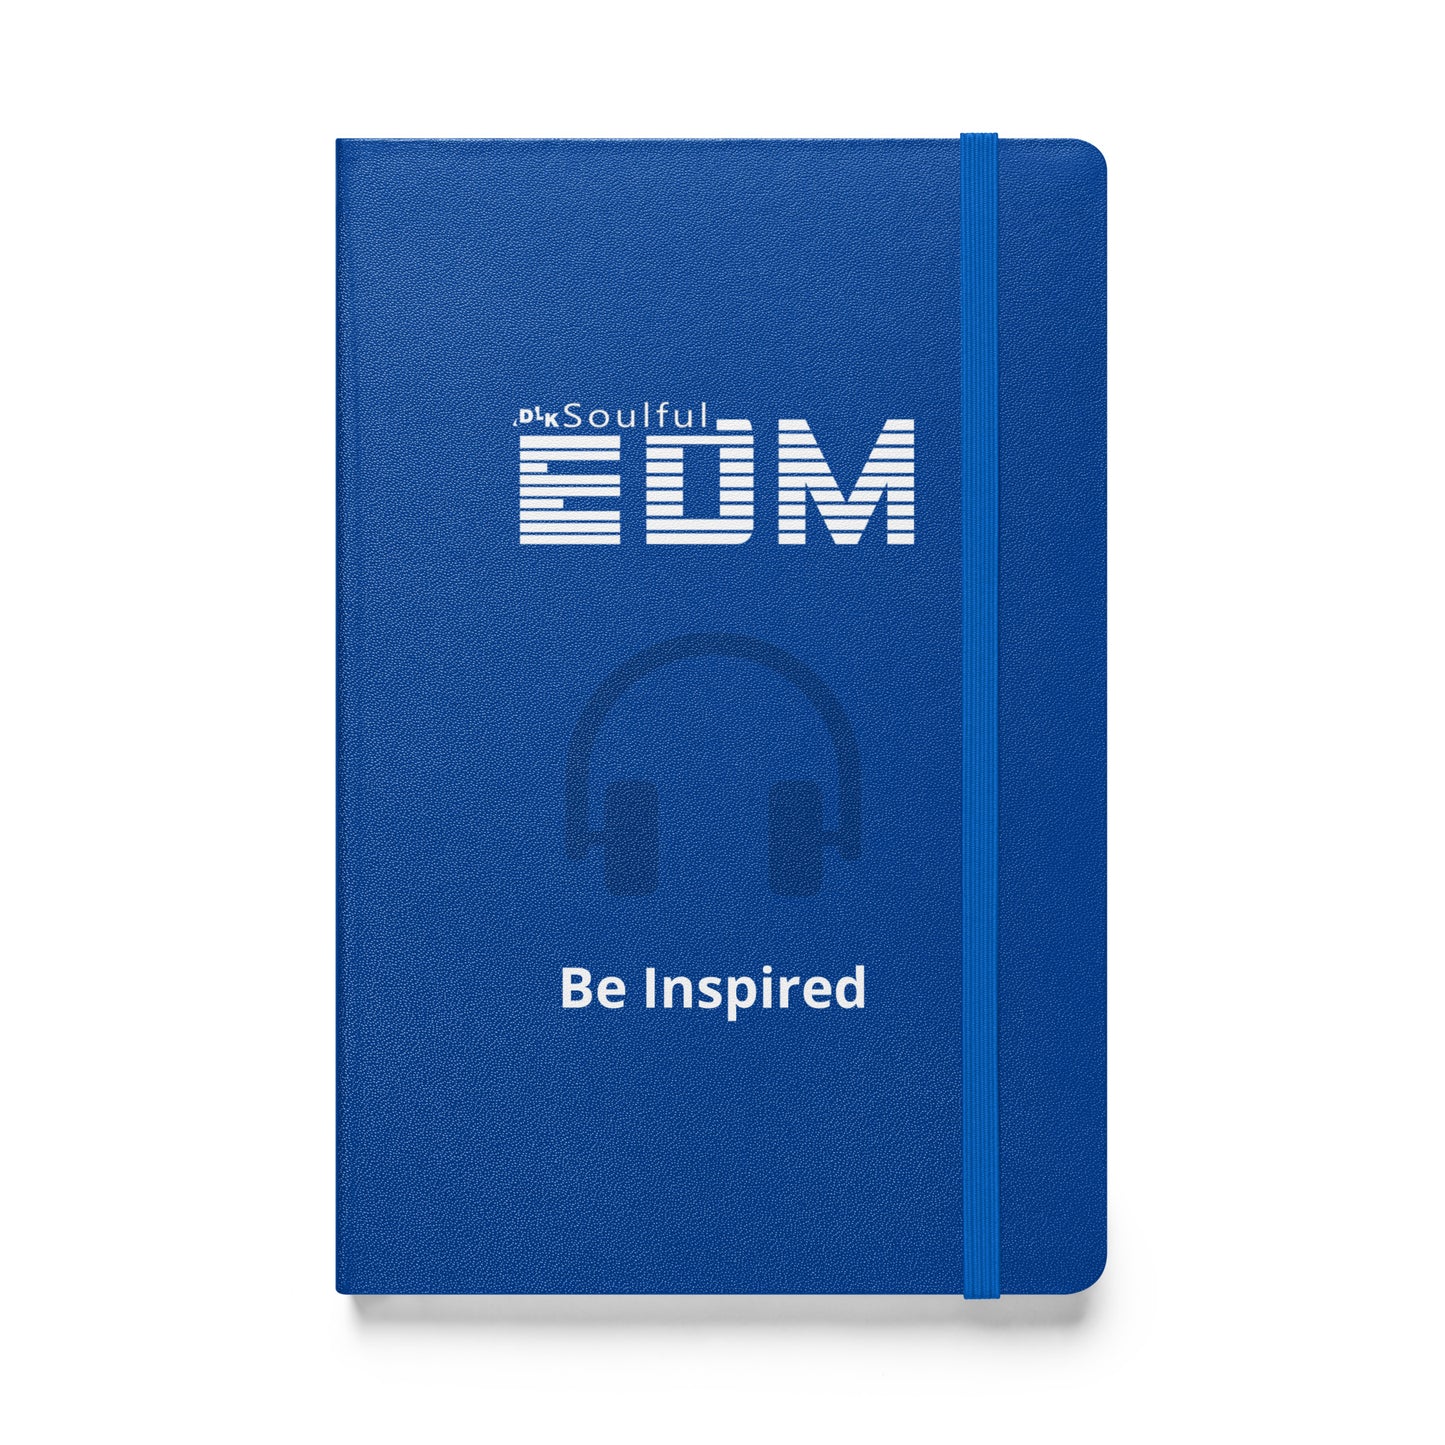 DLK Soulful EDM hardcover artist notebook